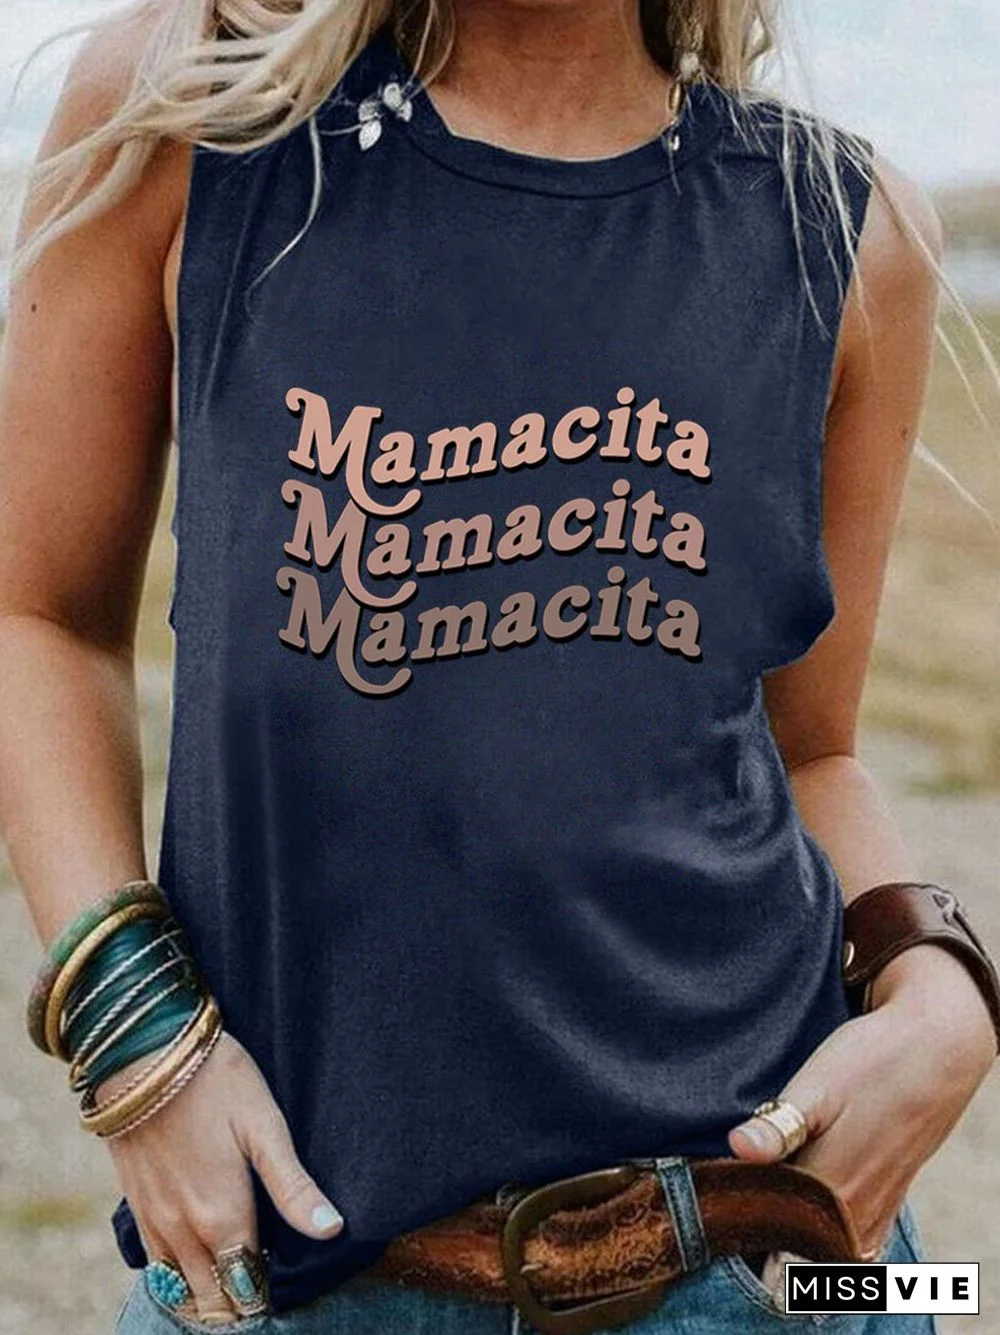 Mamacita New Arrival Spanish Sleeveless Tshirt Women Funny Summer Casual Sleeveless Top Mexican Shirt Latina Tee GiftFor Her